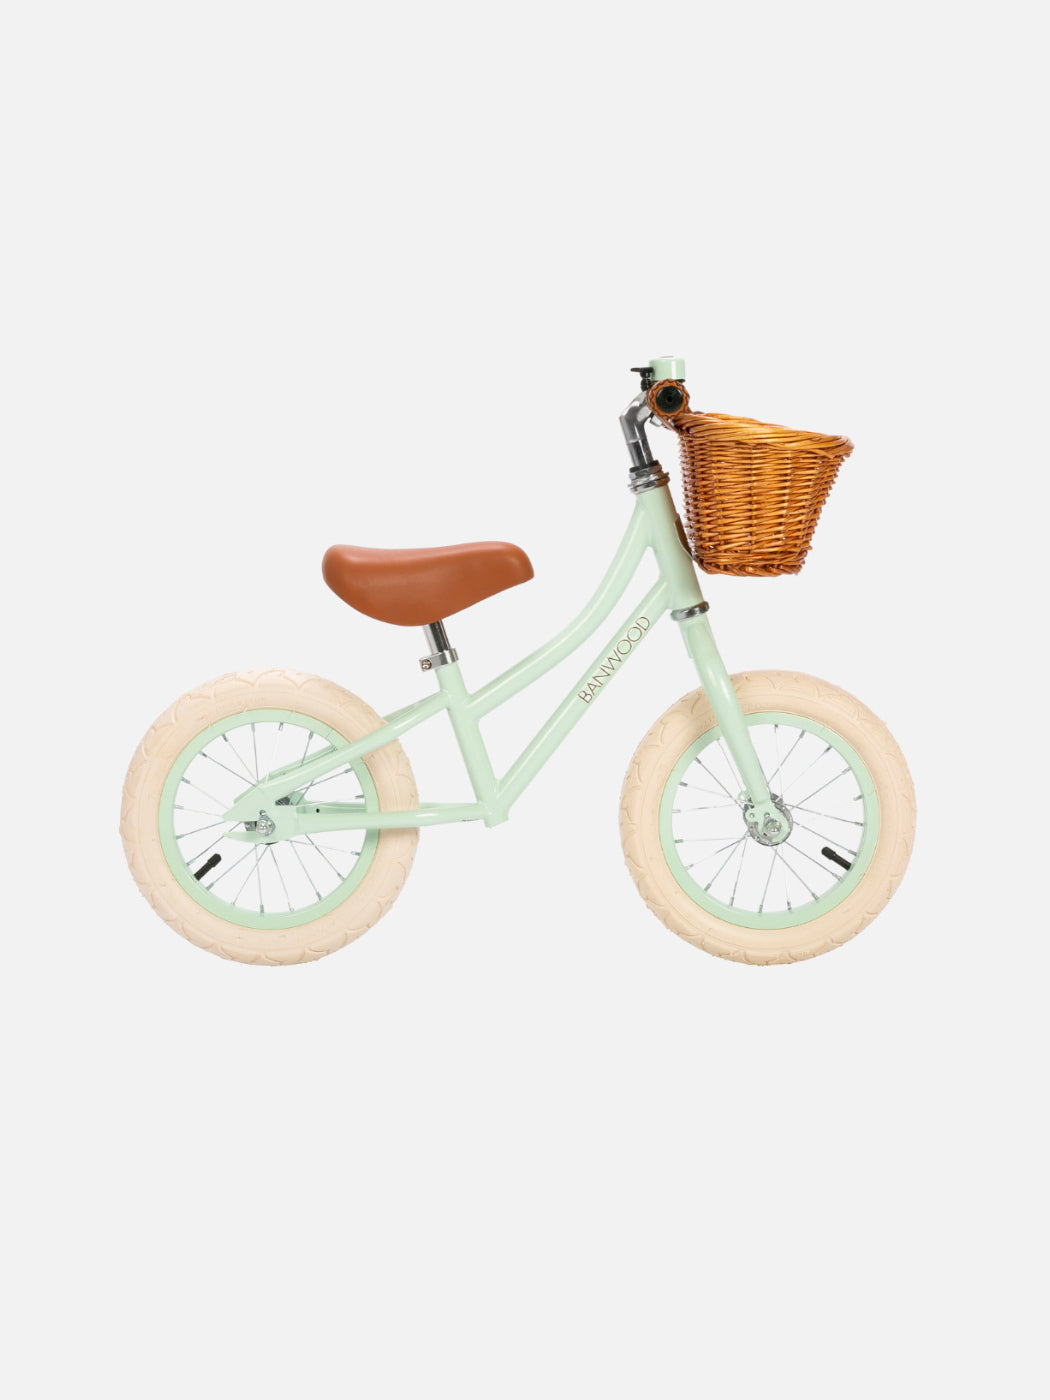 Banwood Balance Bike in Mint with a basket